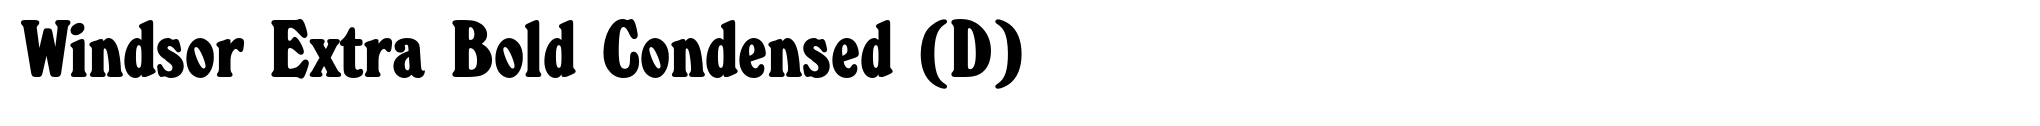 Windsor Extra Bold Condensed (D) image